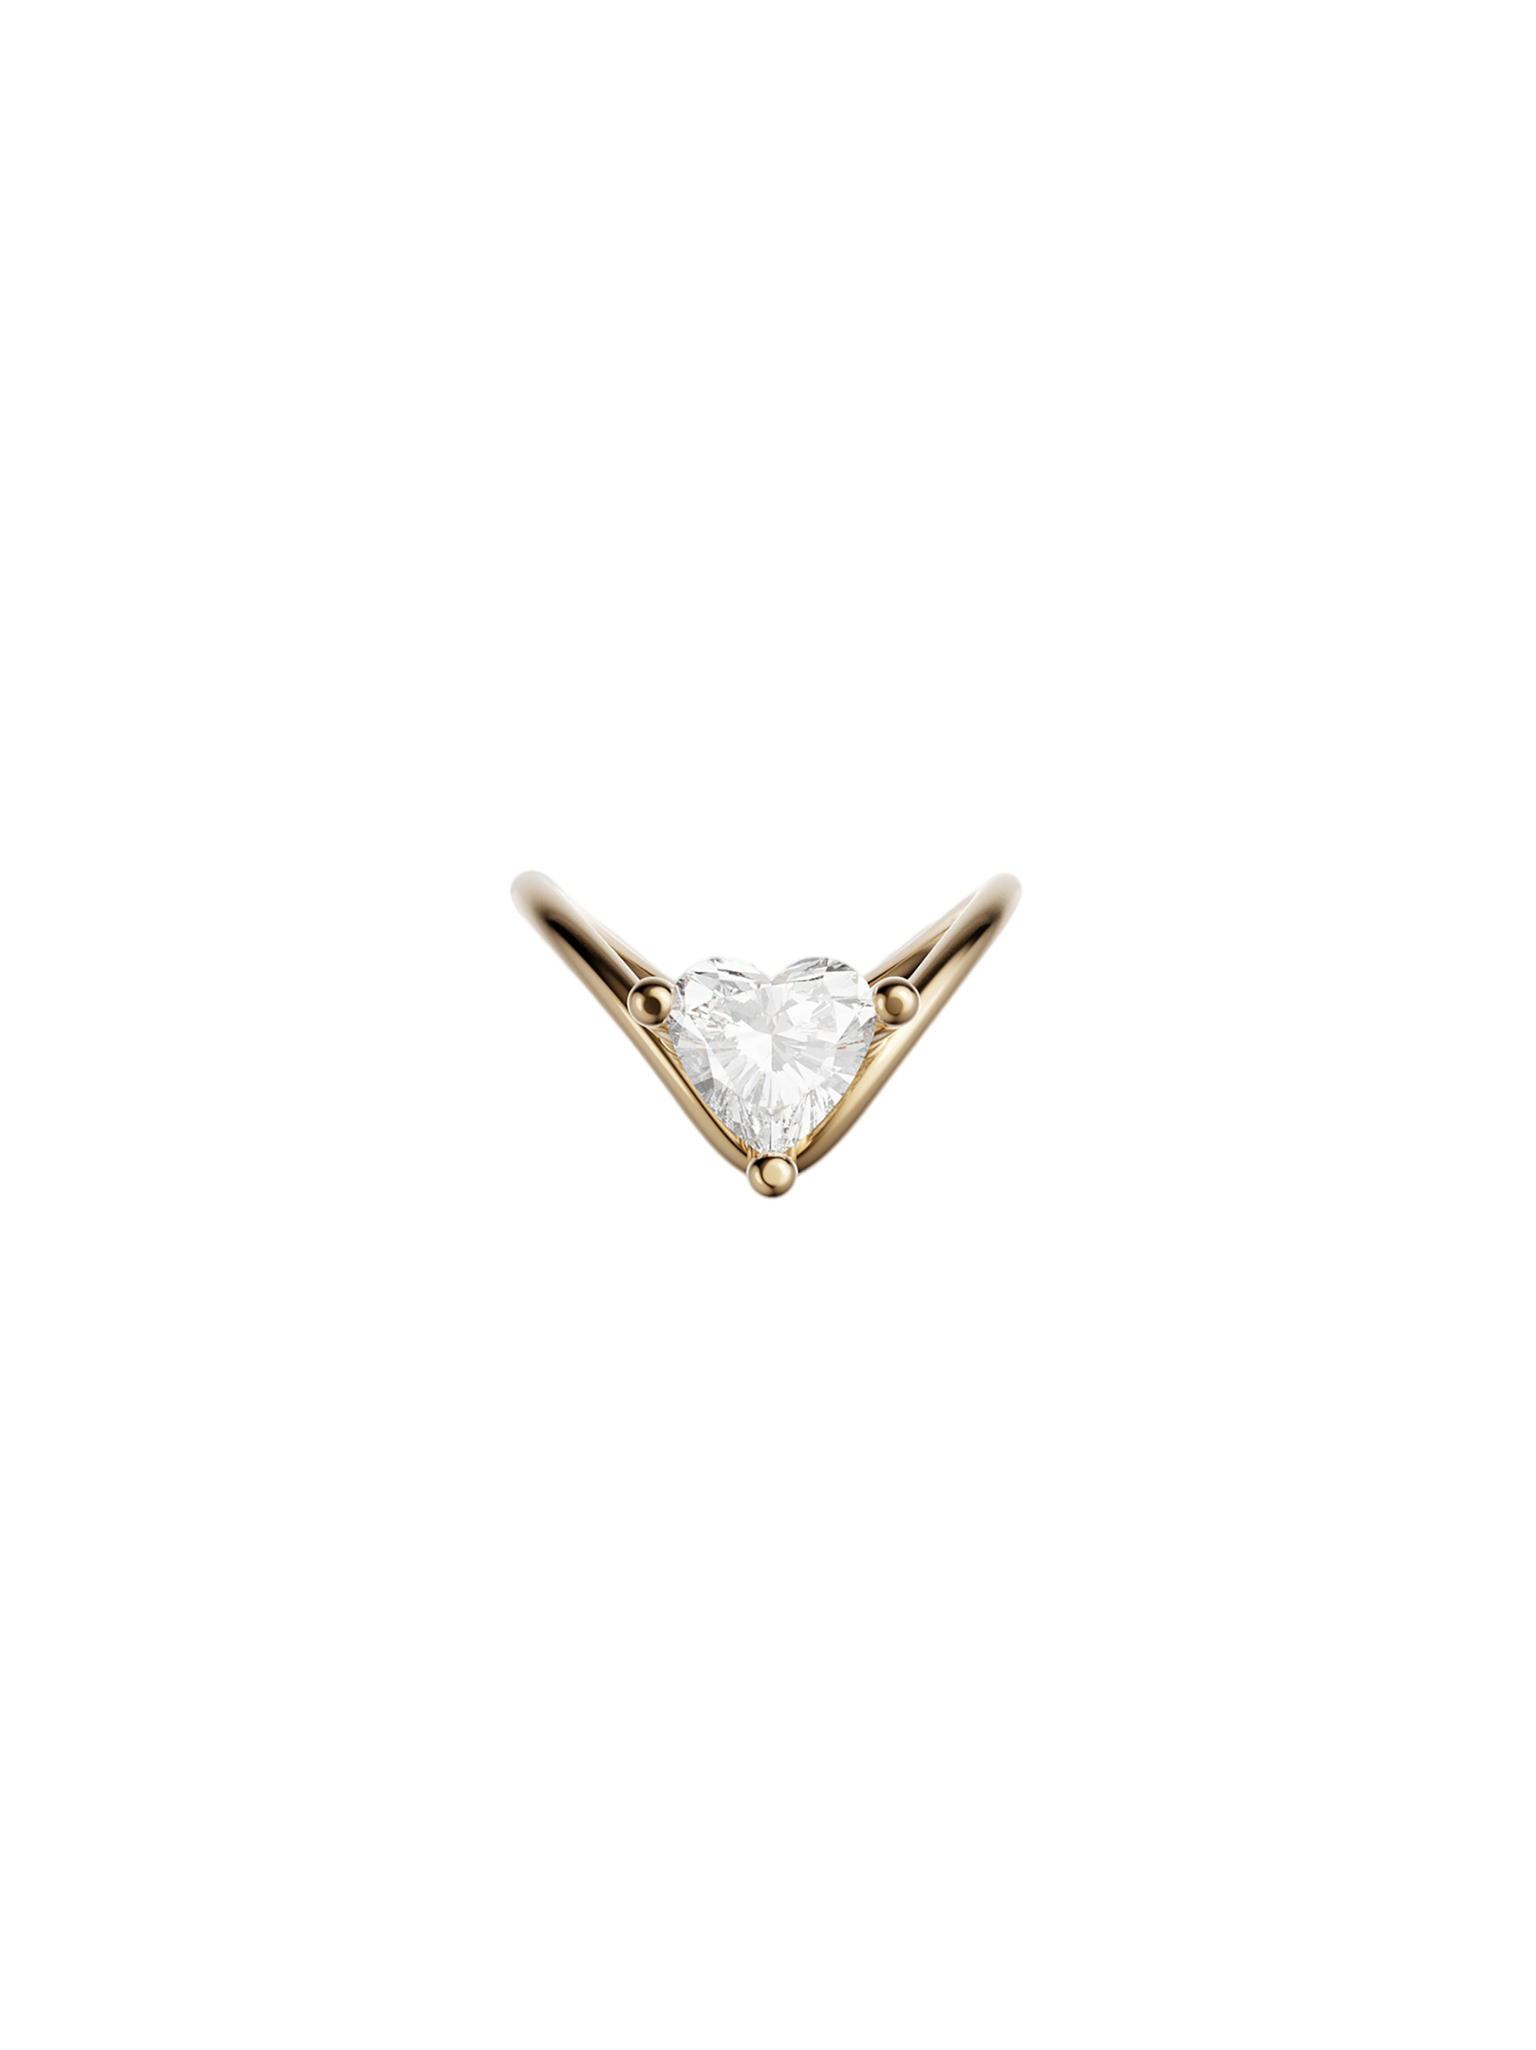 Heart diamond ring 0.75 carat